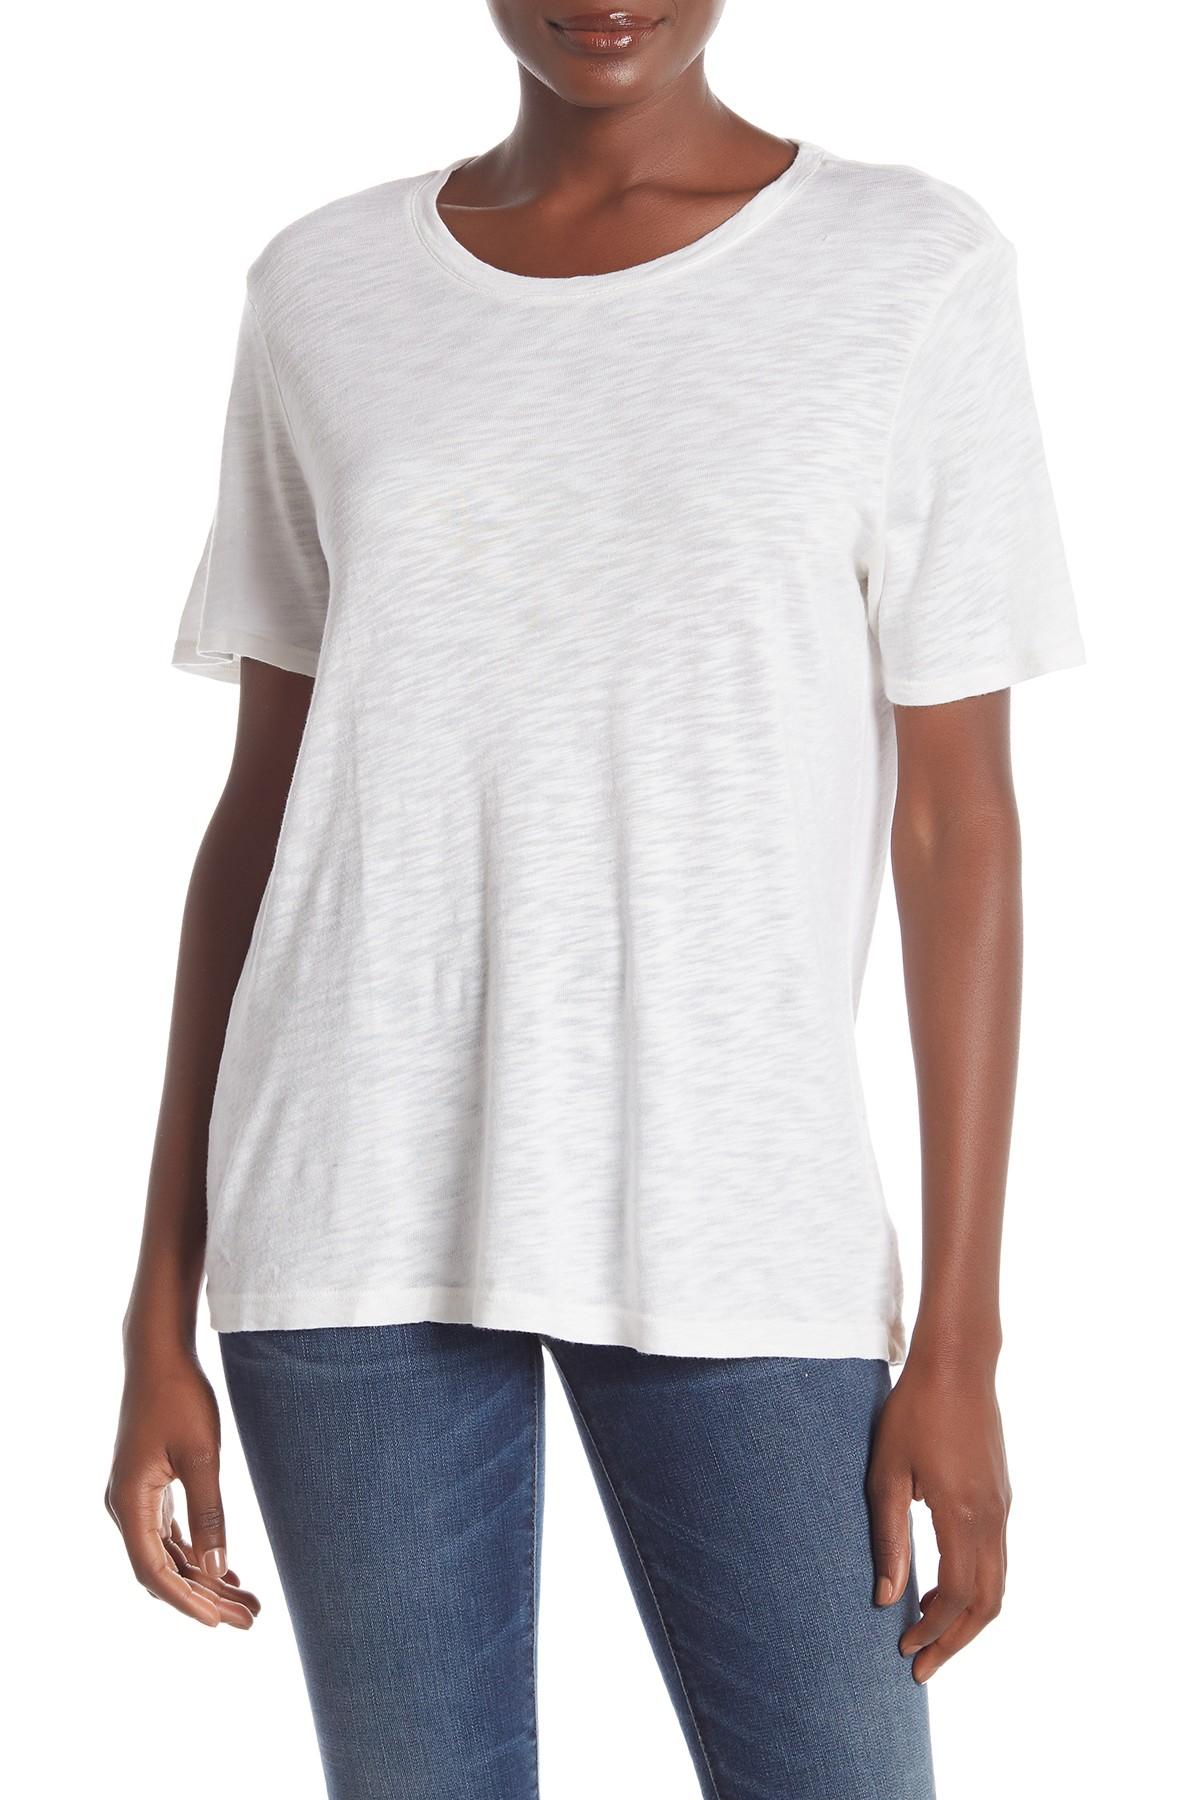 Lyst - Splendid Slub Knit Crew Neck T-shirt in White